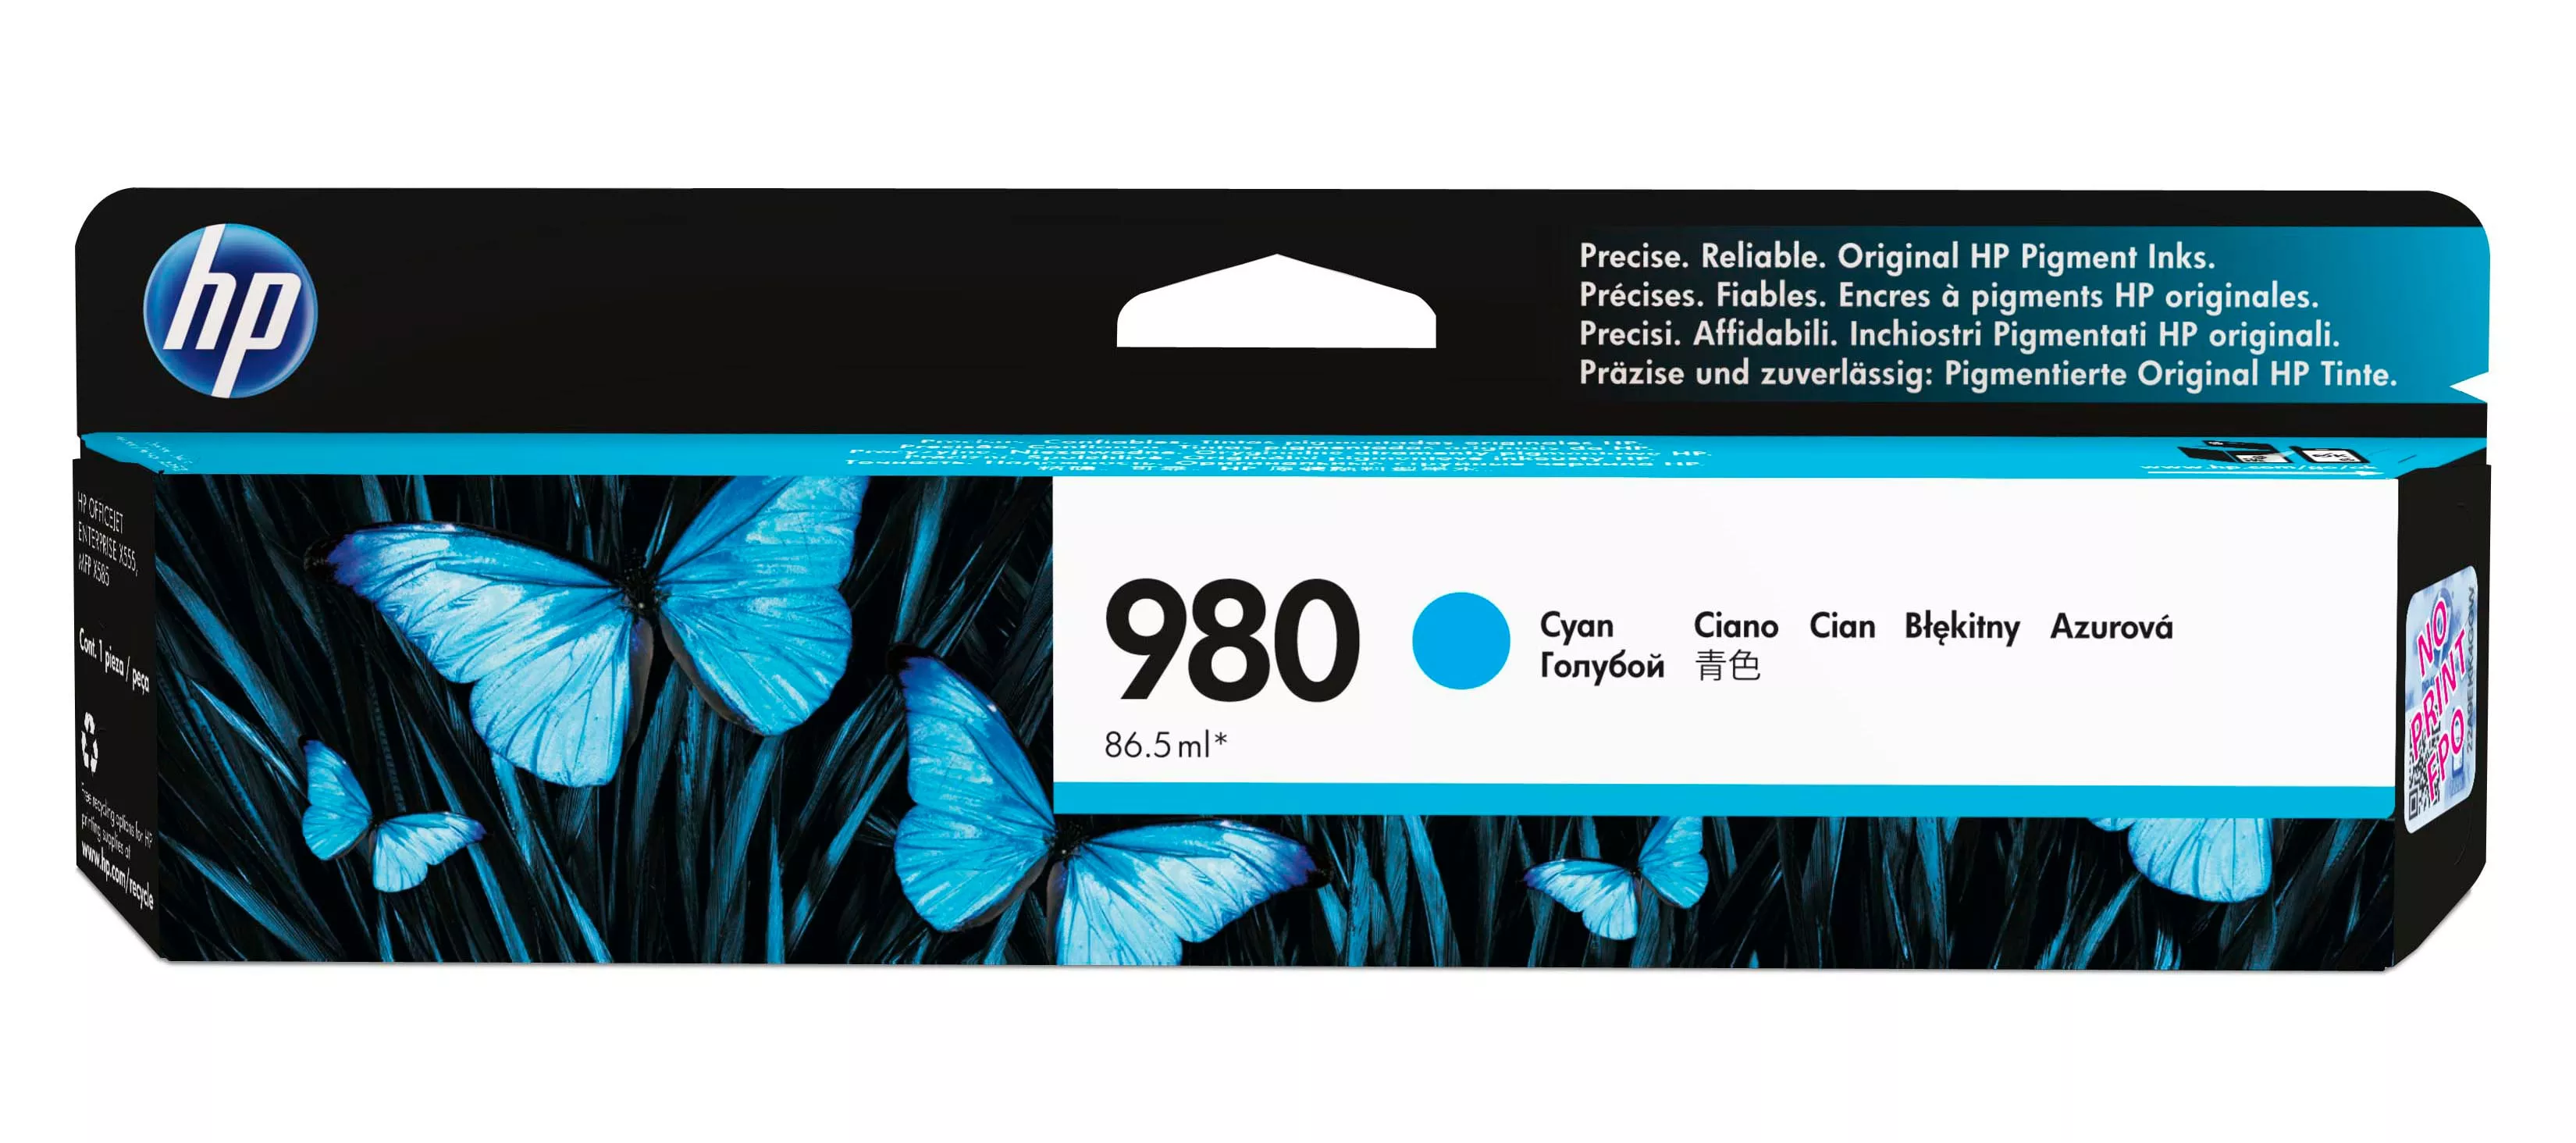 Achat HP 980A original Ink cartridge D8J07A cyan standard capacity au meilleur prix